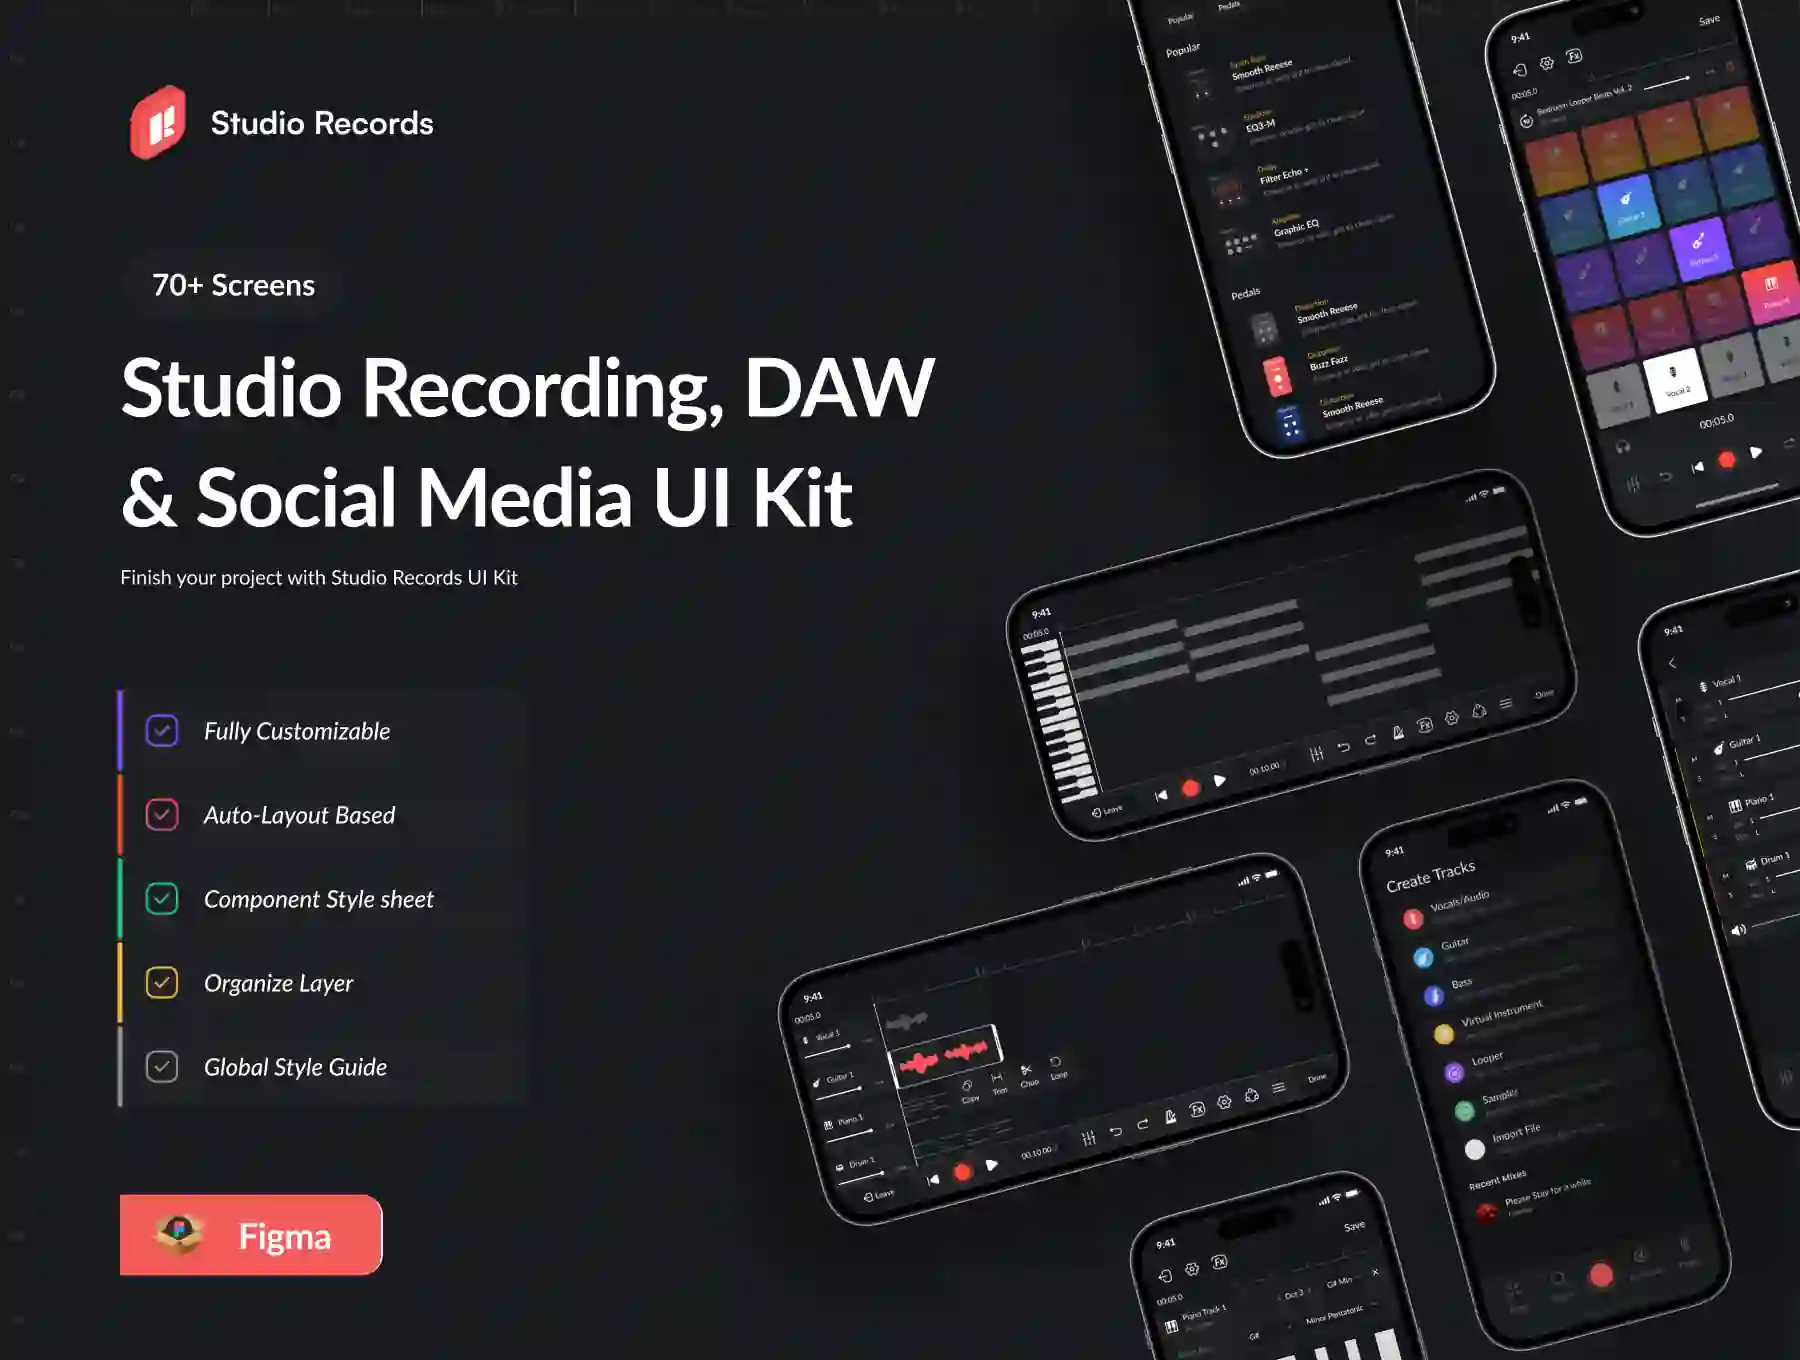 Studio Records DAW UI Kit